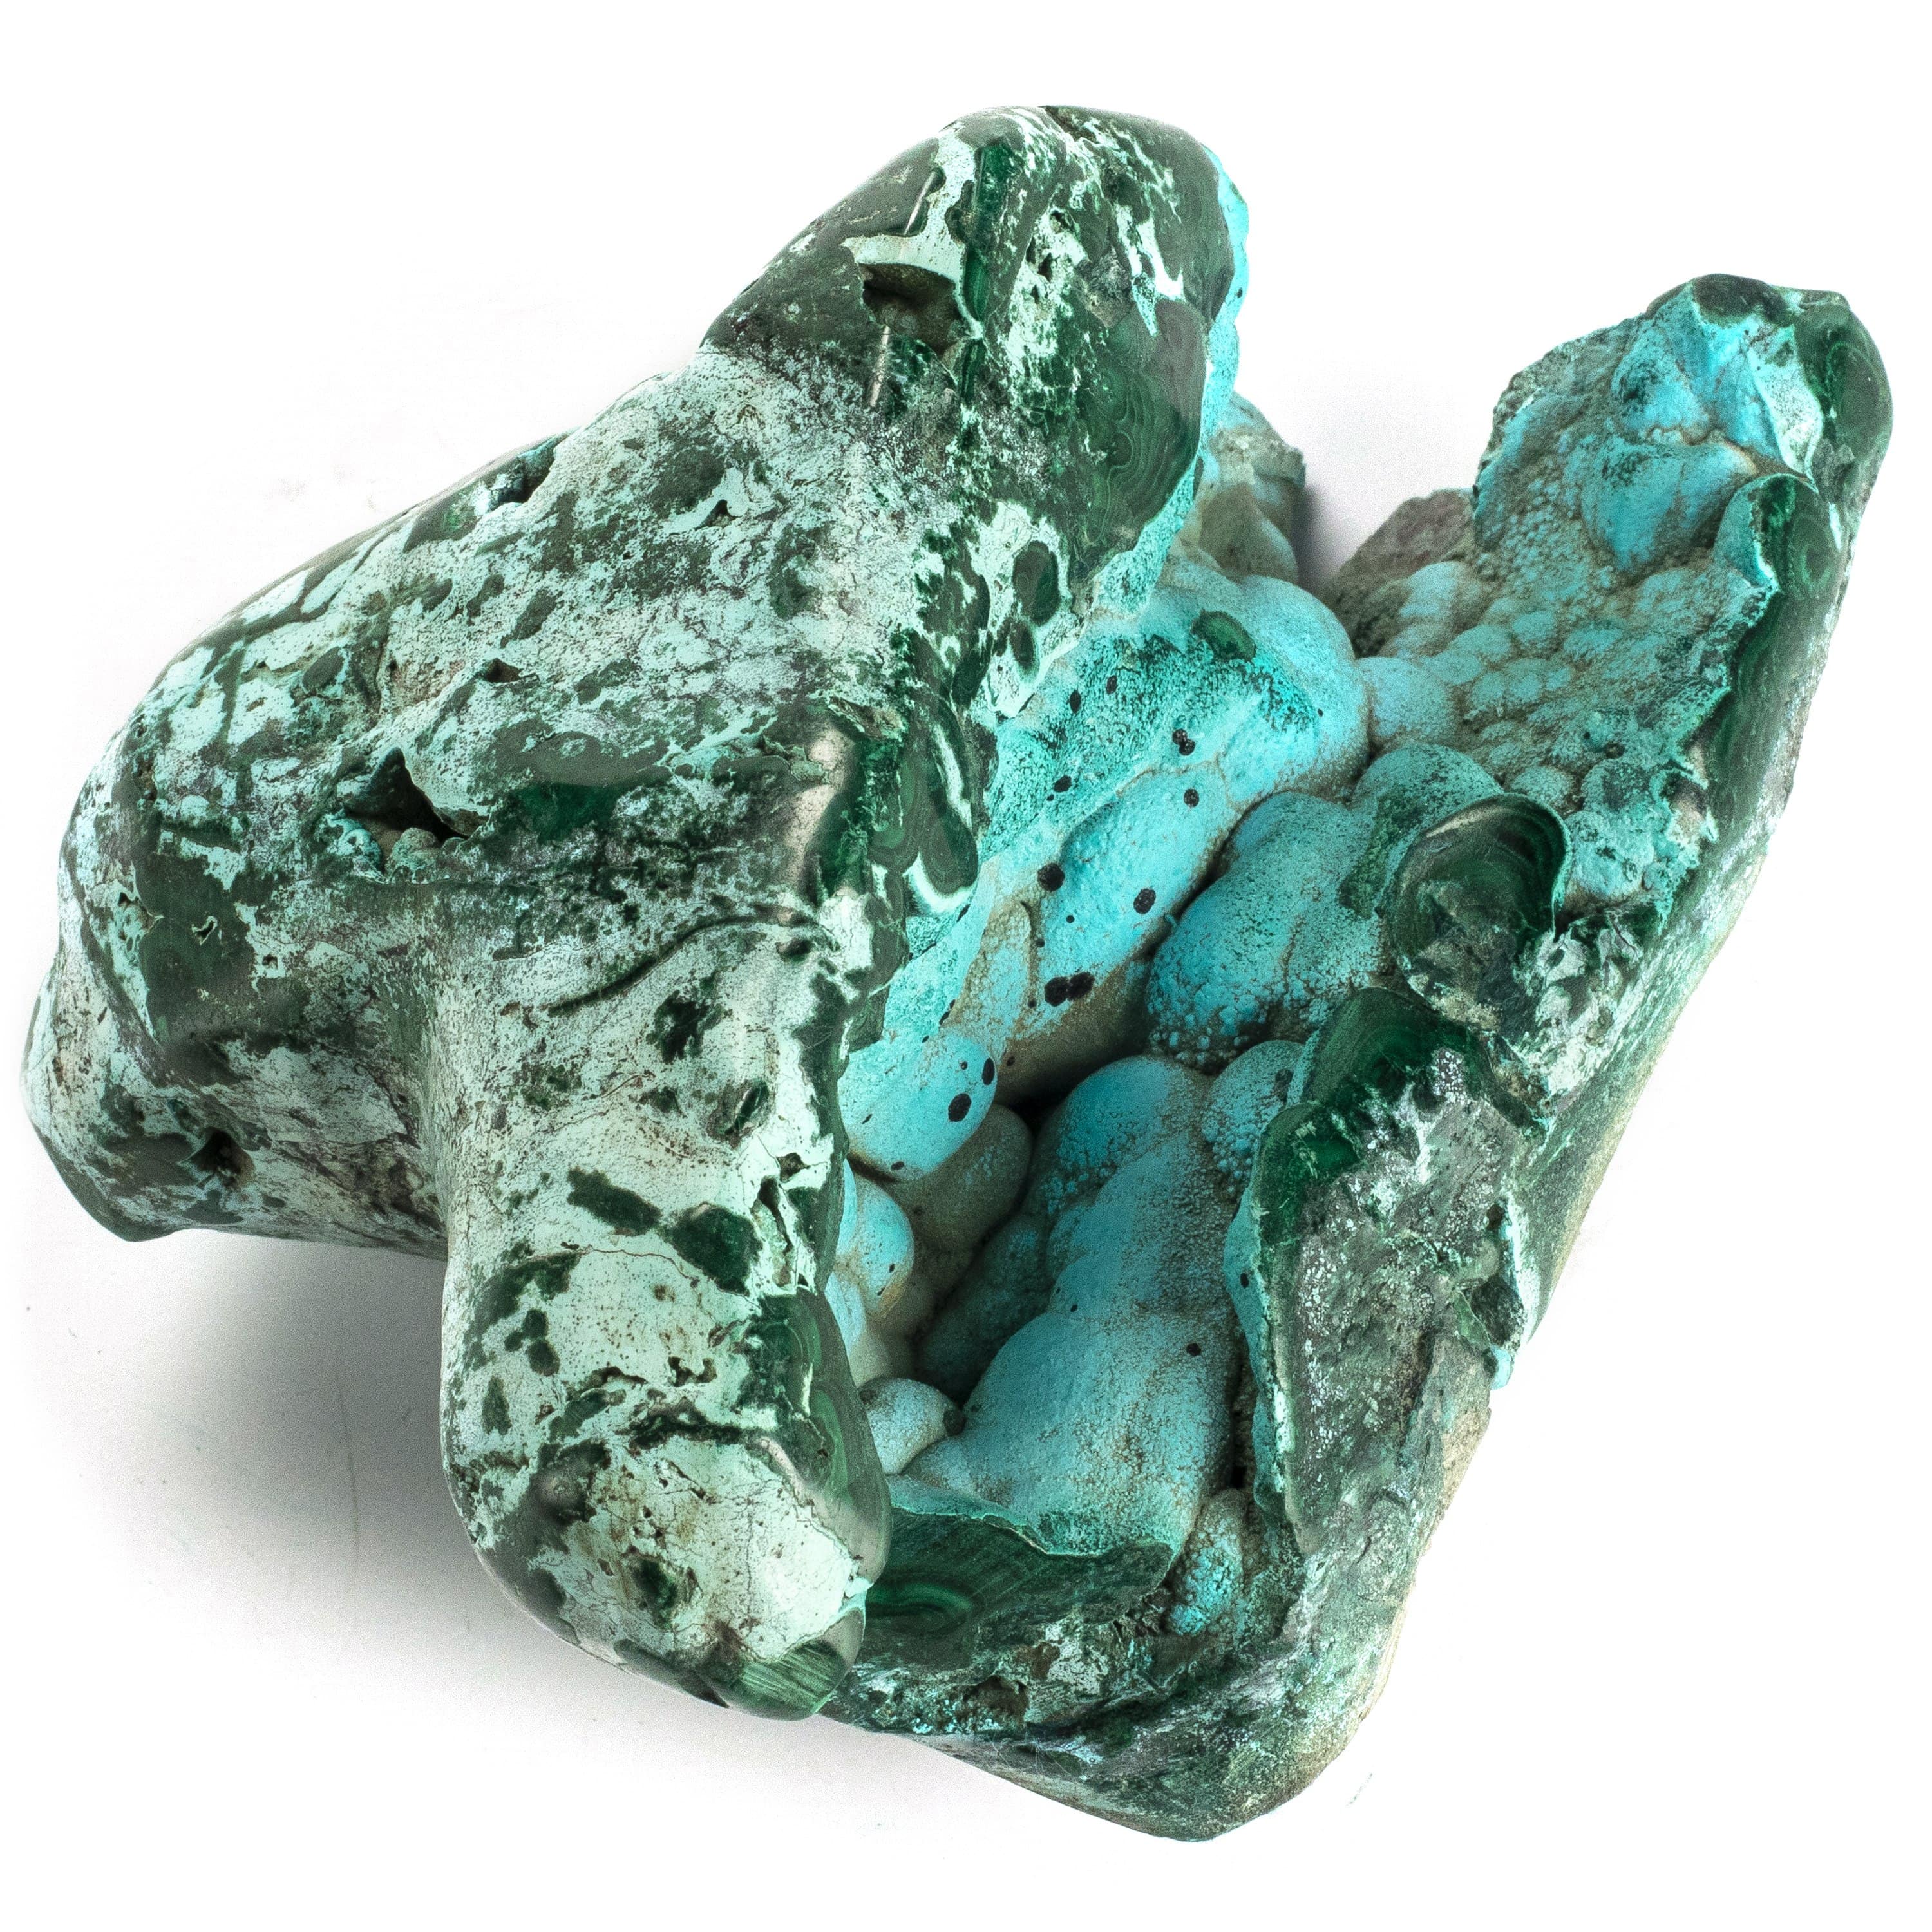 Kalifano Malachite Rare Natural Green Malachite with Blue Chrysocolla Freeform Specimen from Congo - 1 kg / 2.1 lbs MAC850.003